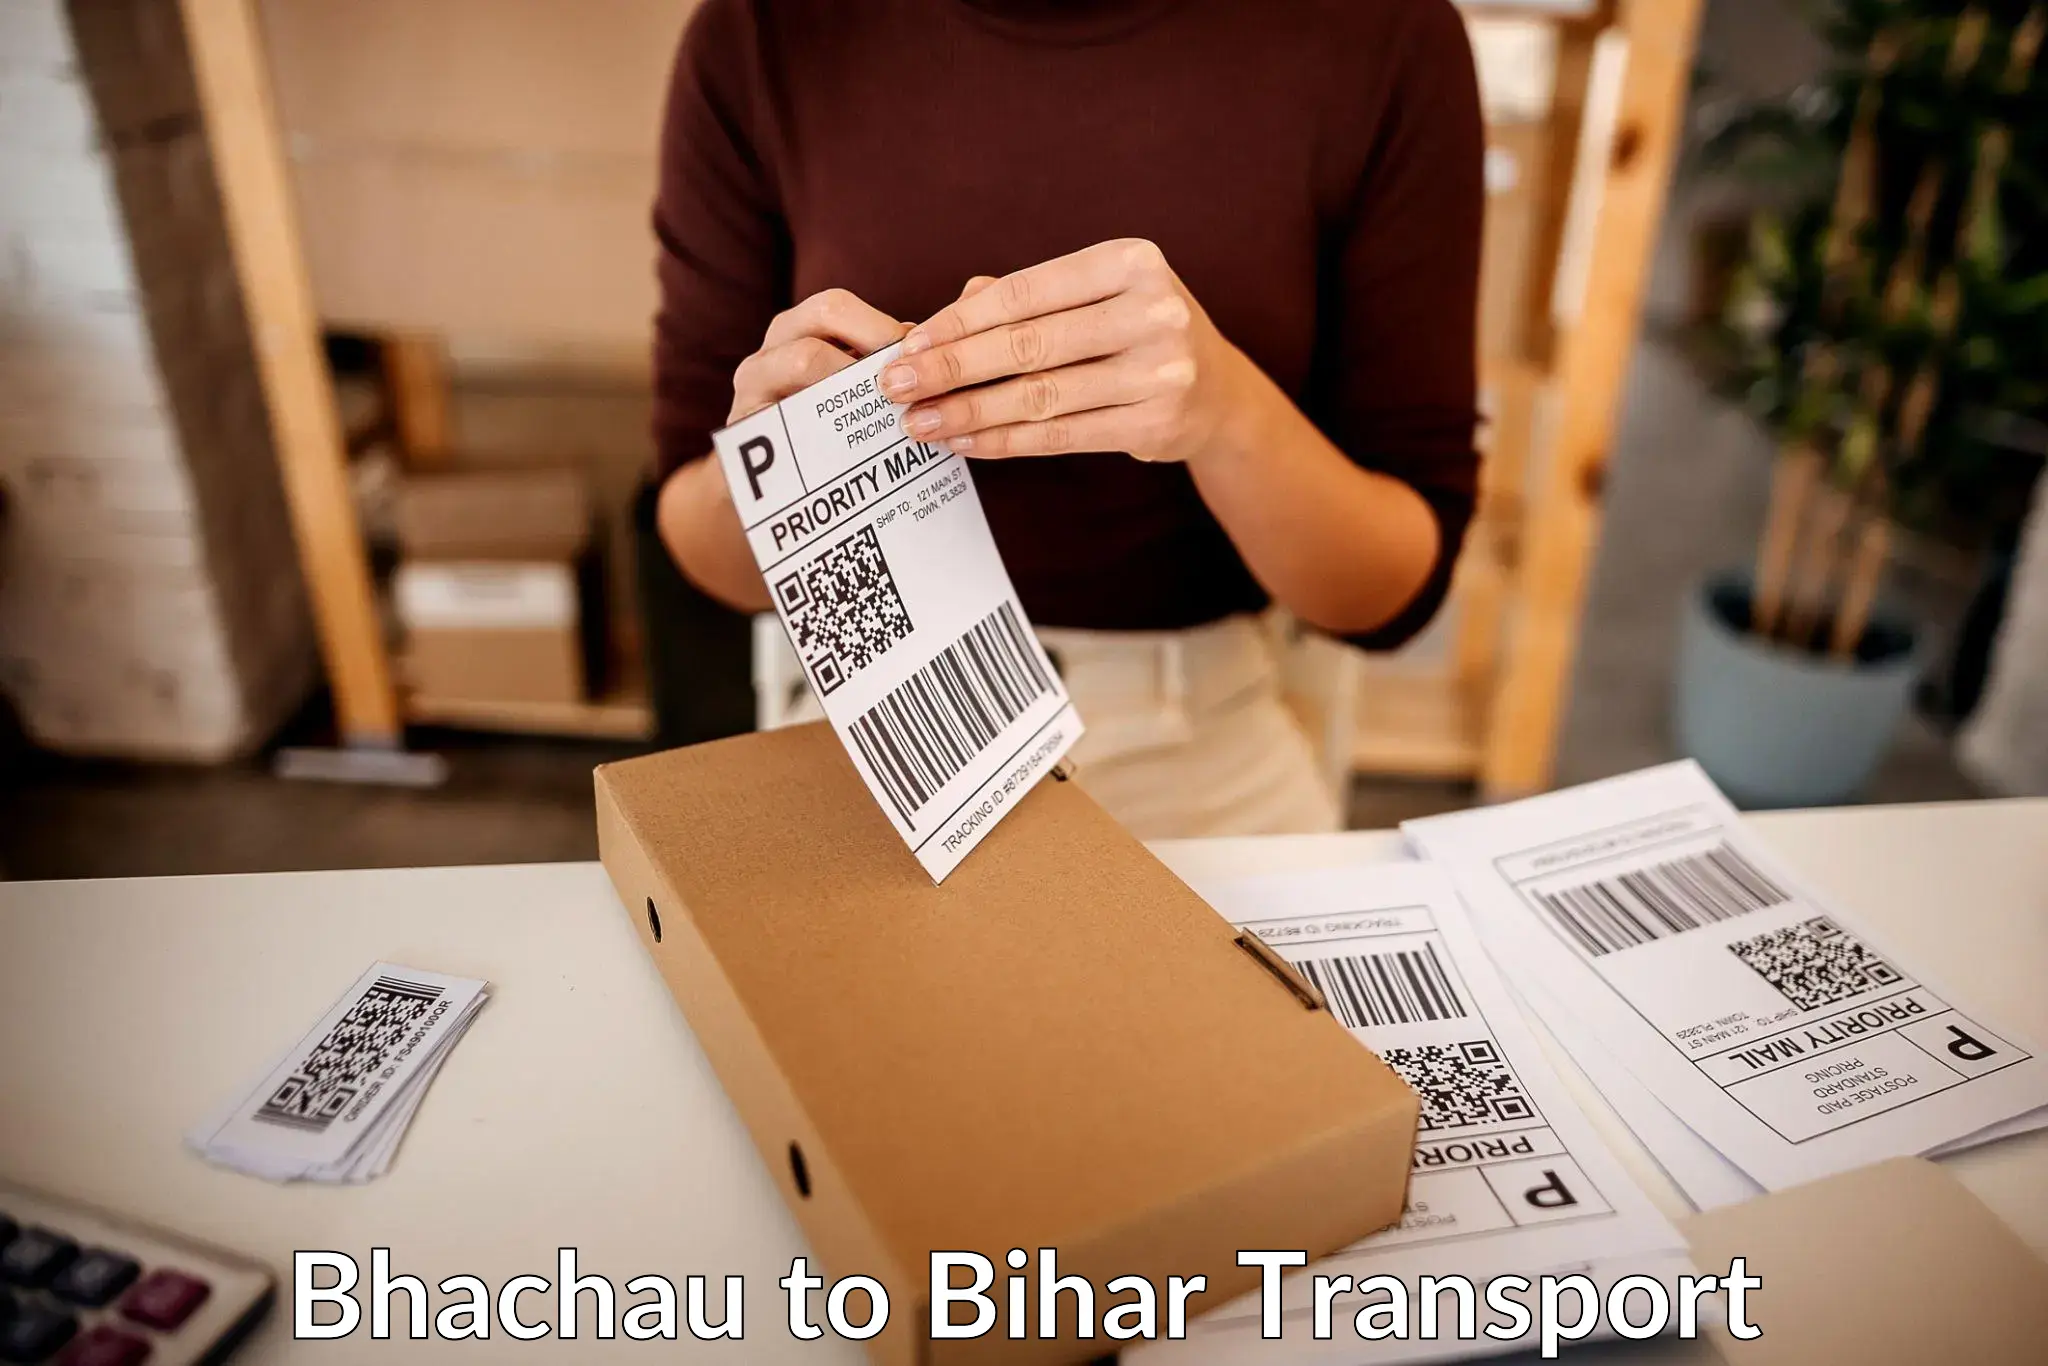 Truck transport companies in India Bhachau to Gopalganj